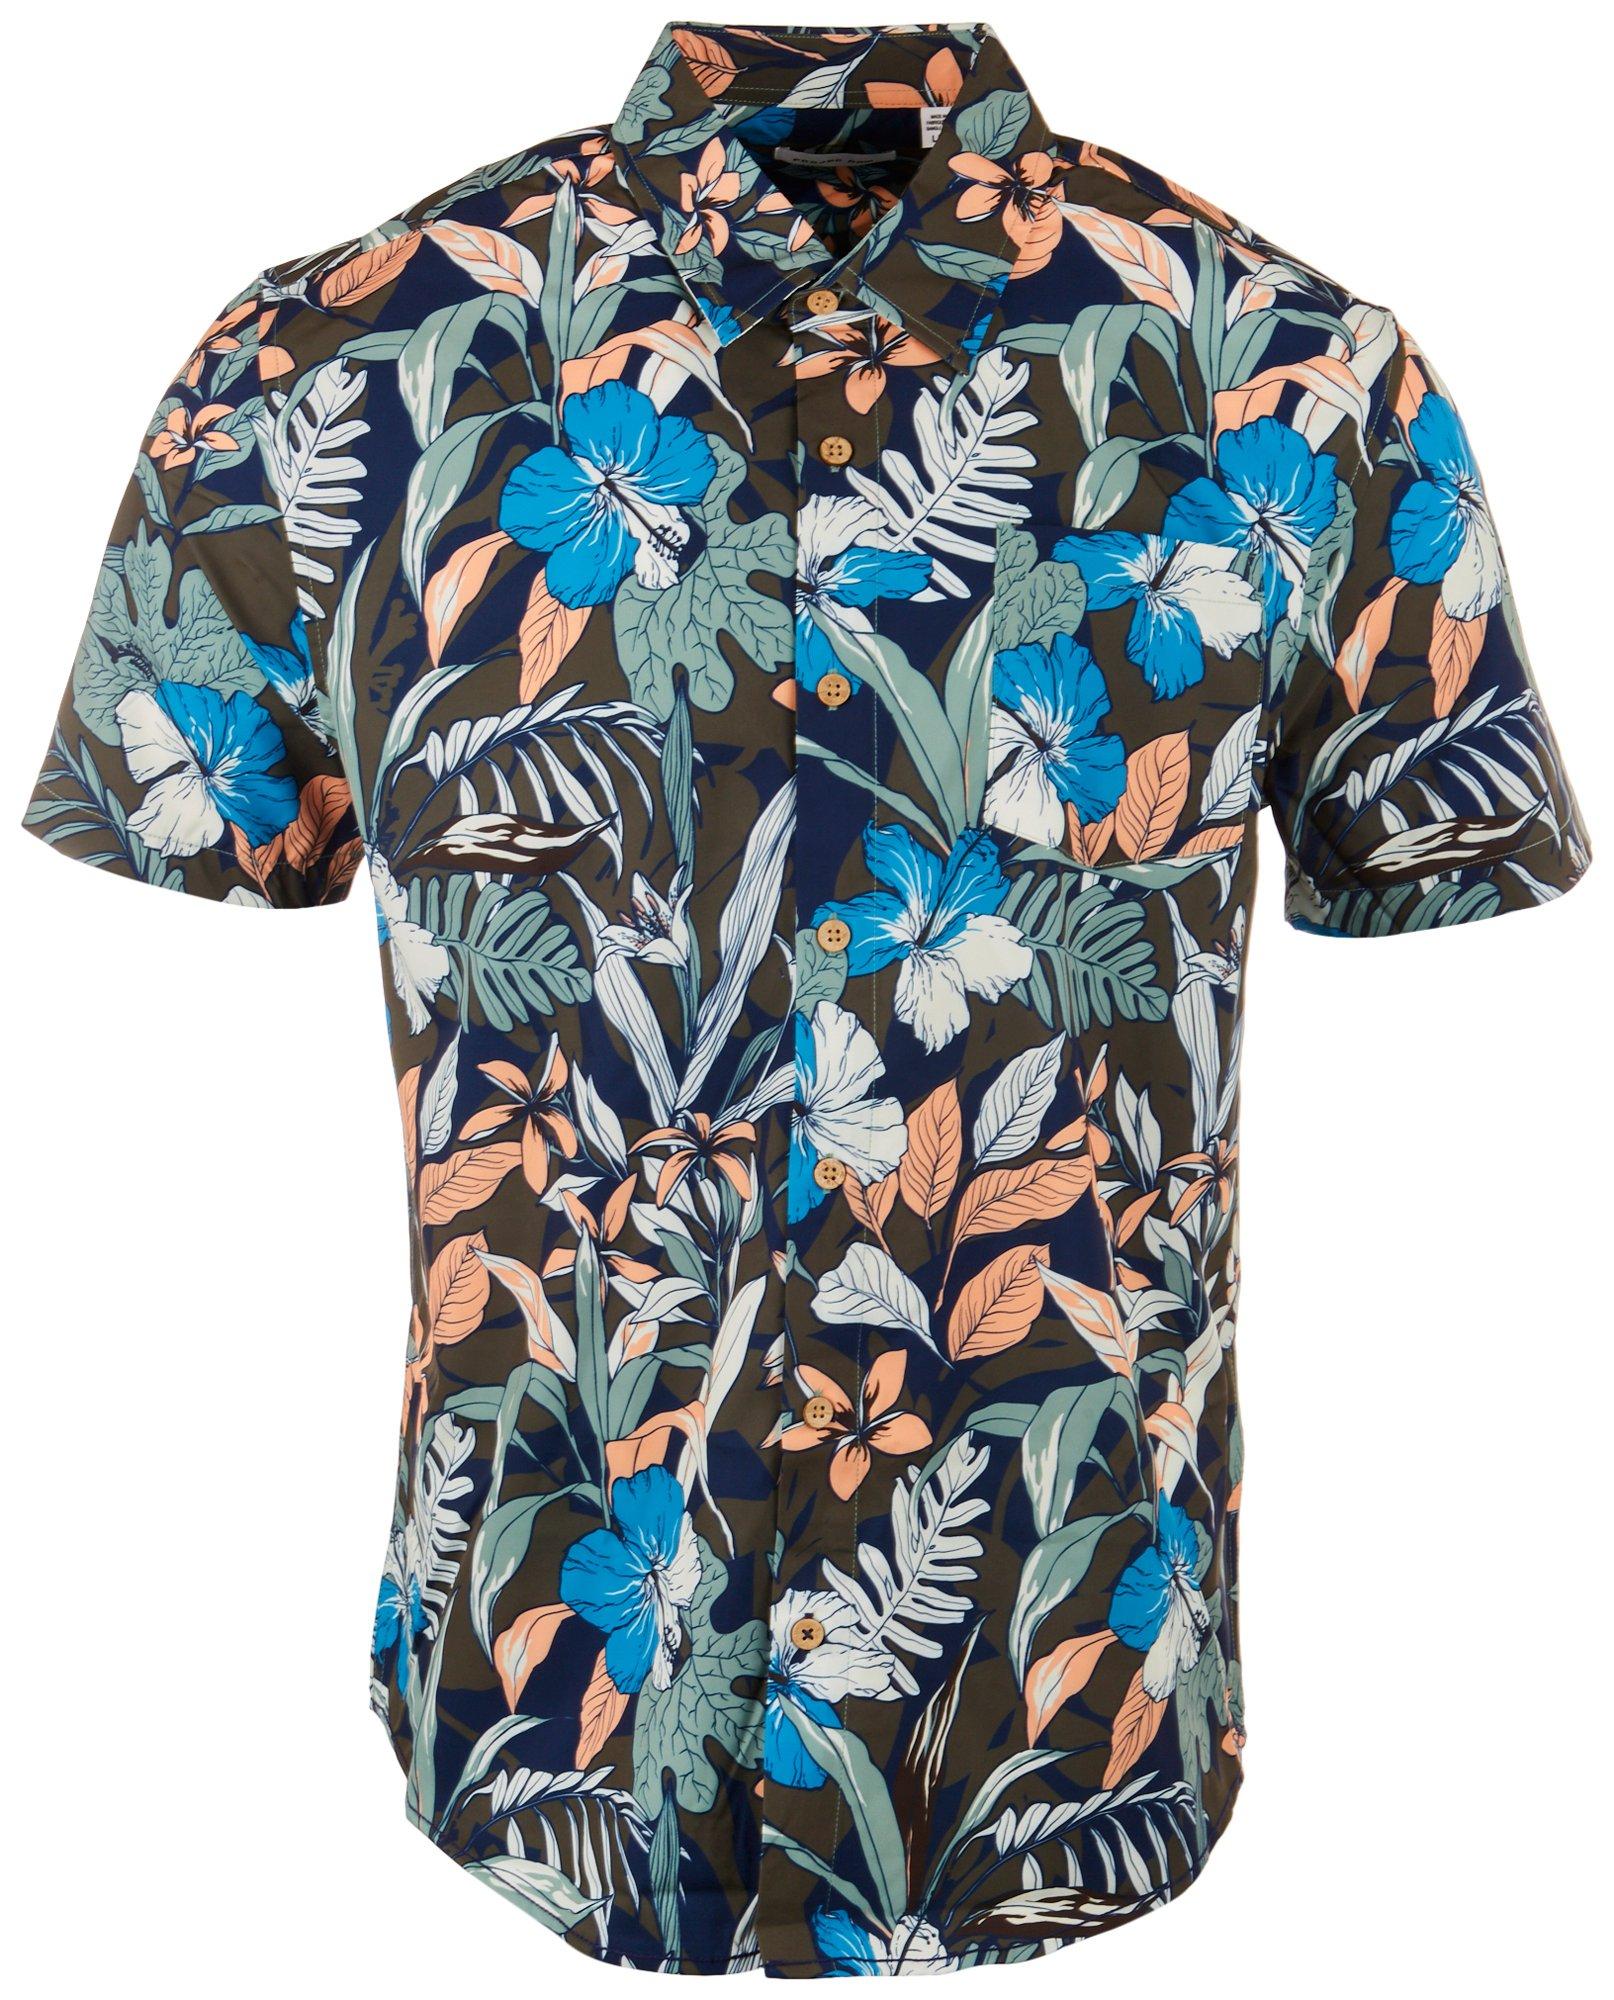 PROJEK RAW Mens Tropical Floral Short Sleeve Shirt